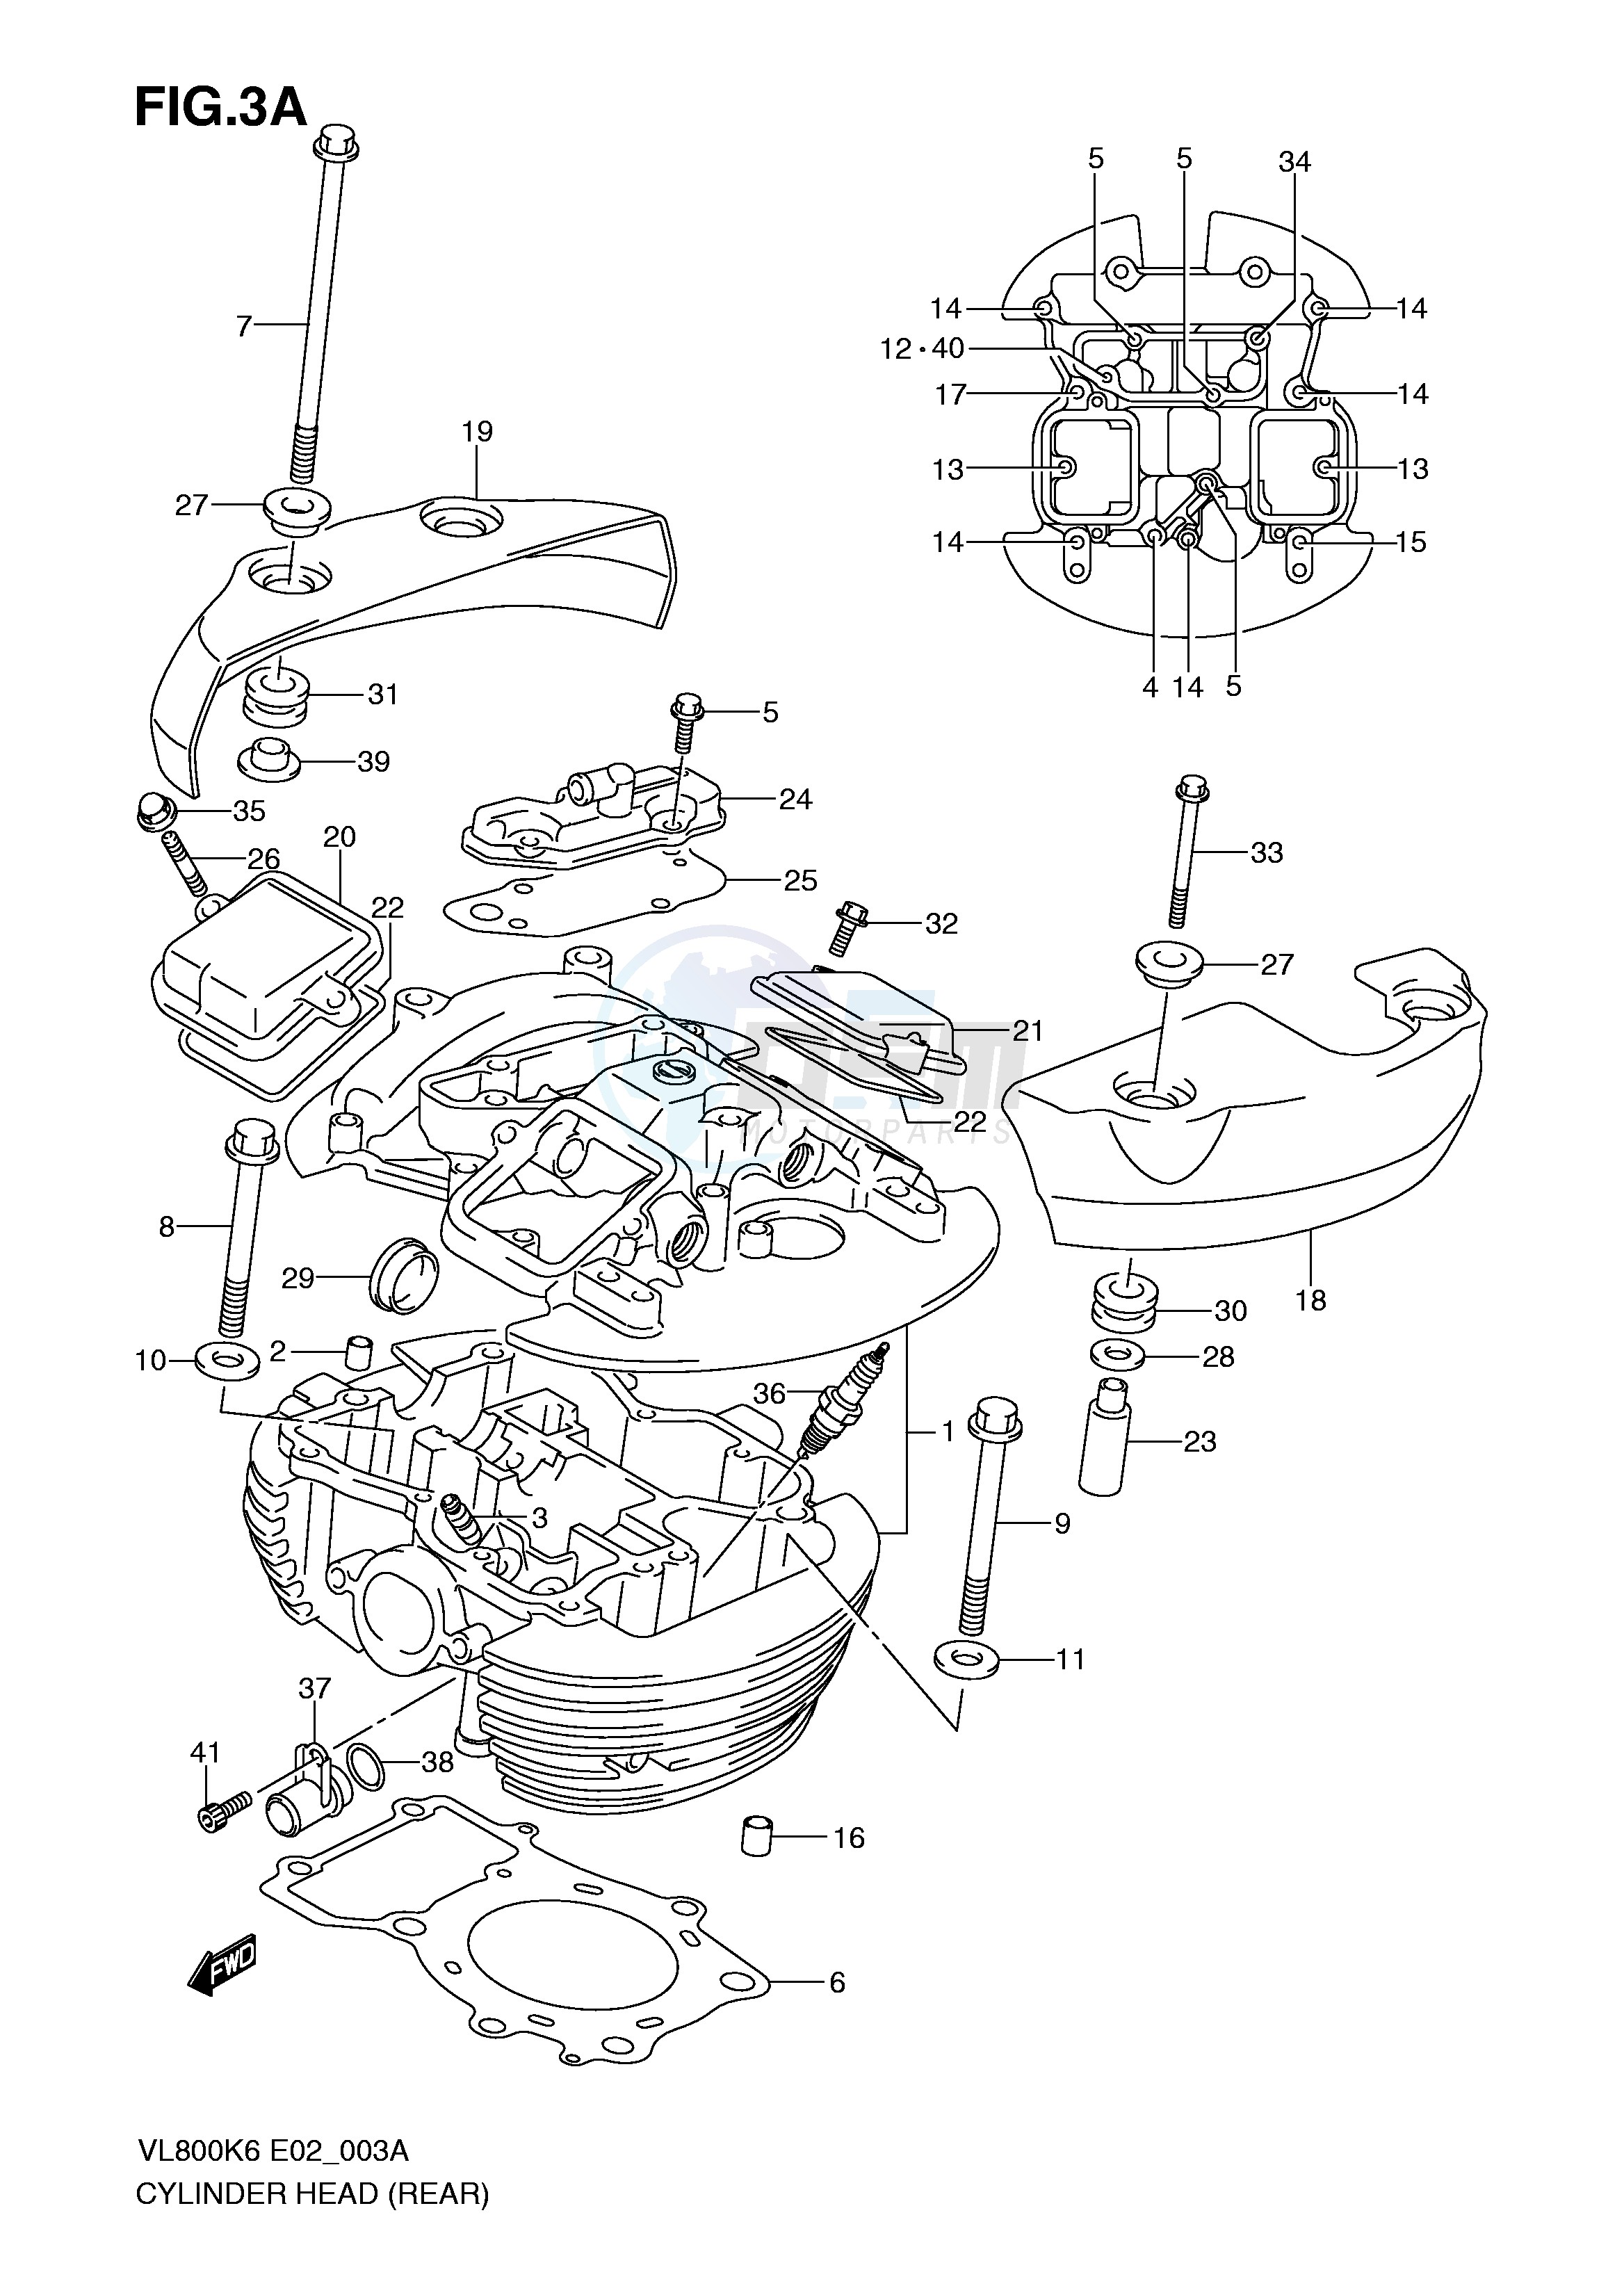 REAR CYLINDER HEAD (MODEL K9 L0) blueprint